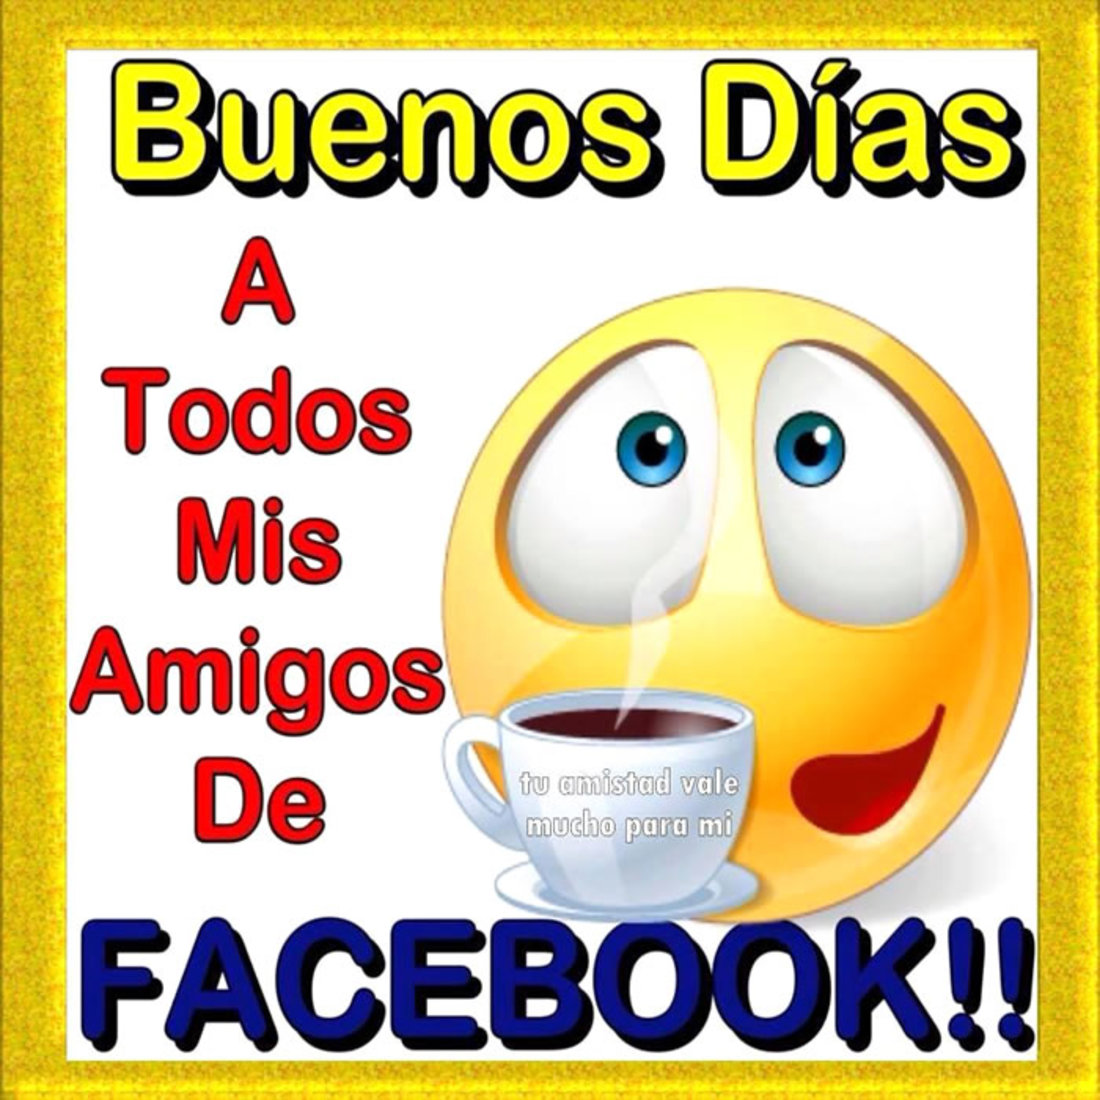 Buenos Días a todos mis amigos de Facebook!!